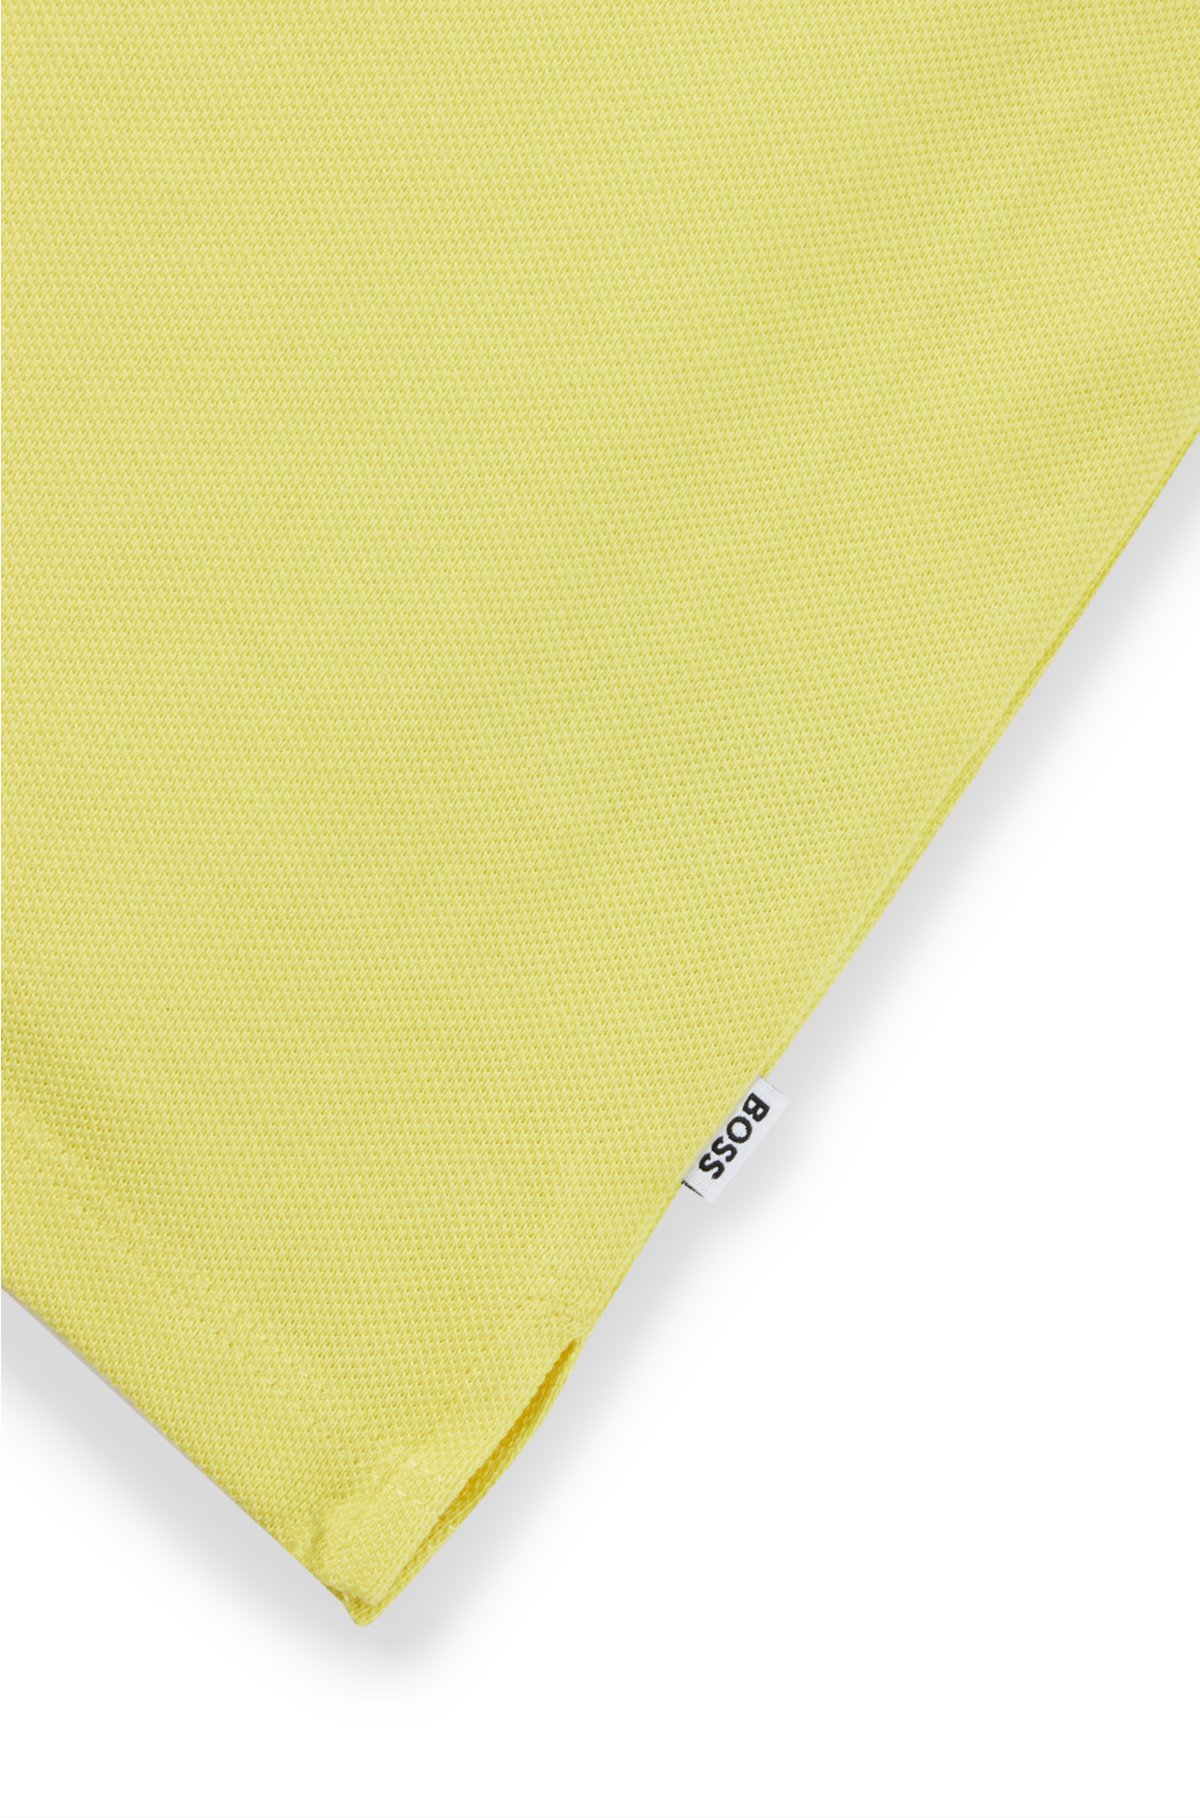 Kids' cotton-piqué polo shirt with logo and stripes, Yellow